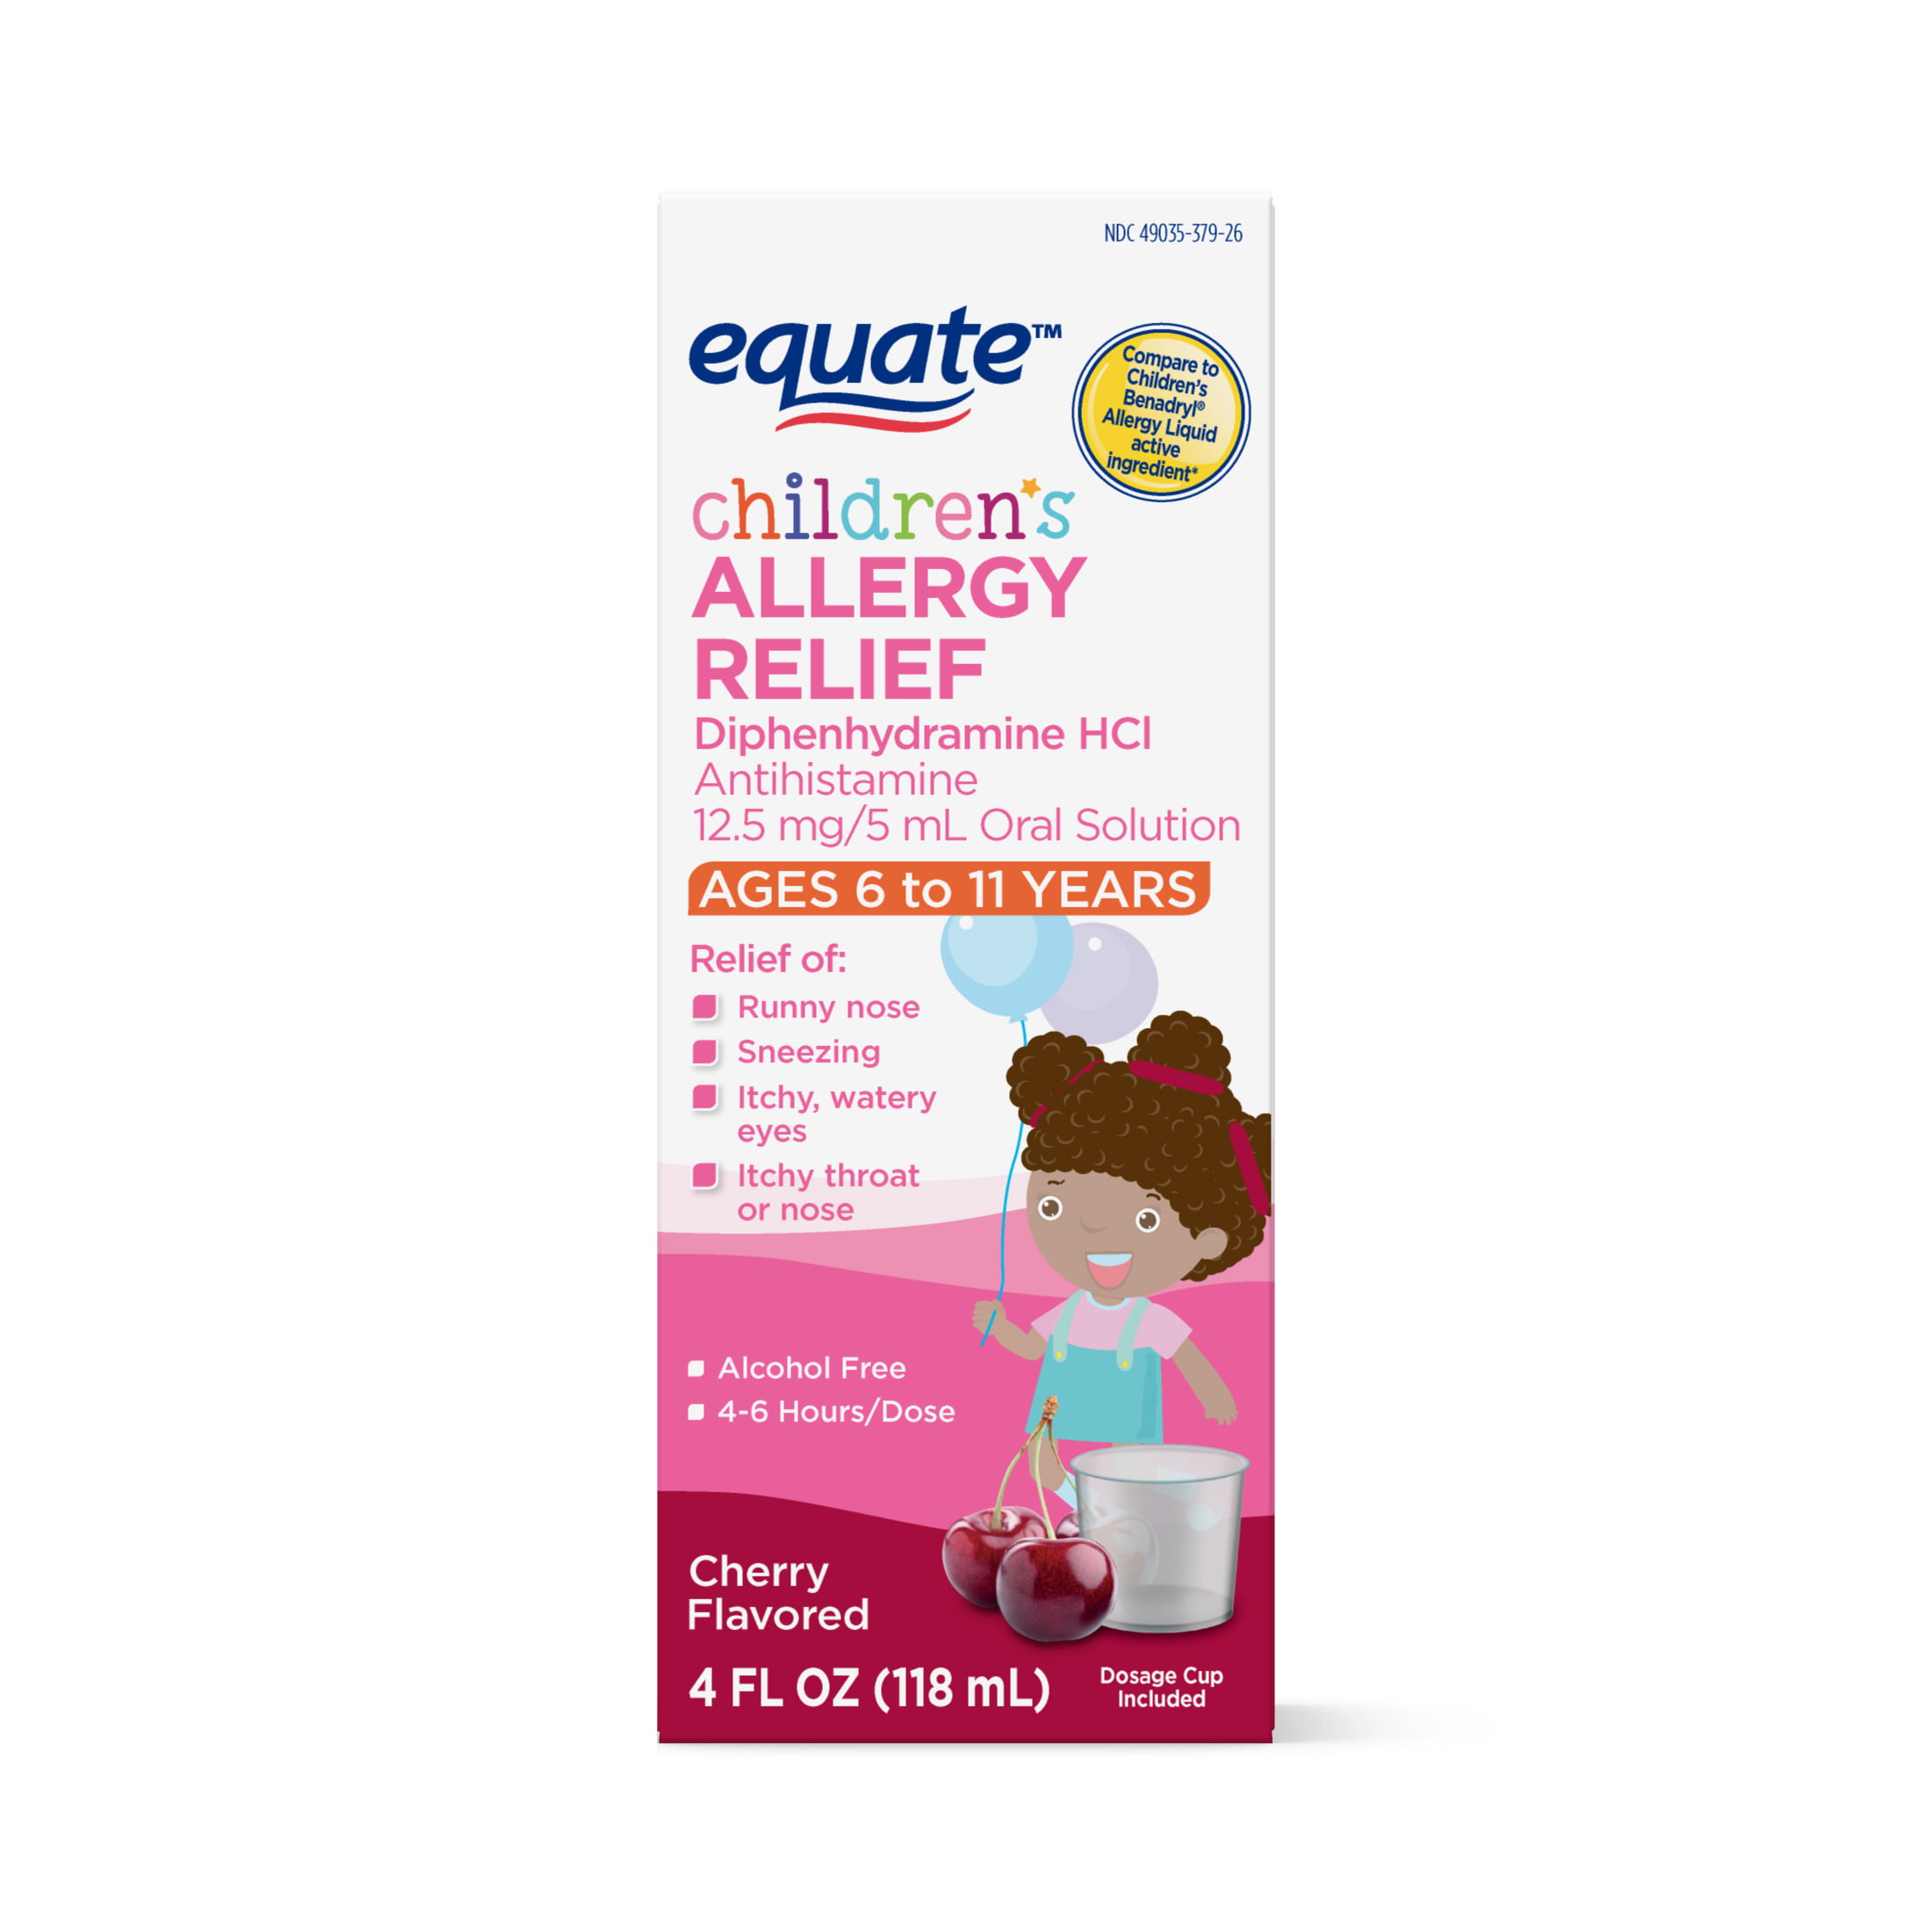 Equate Children S Multi Symptom Cold And Fever Liquid Dosage Chart